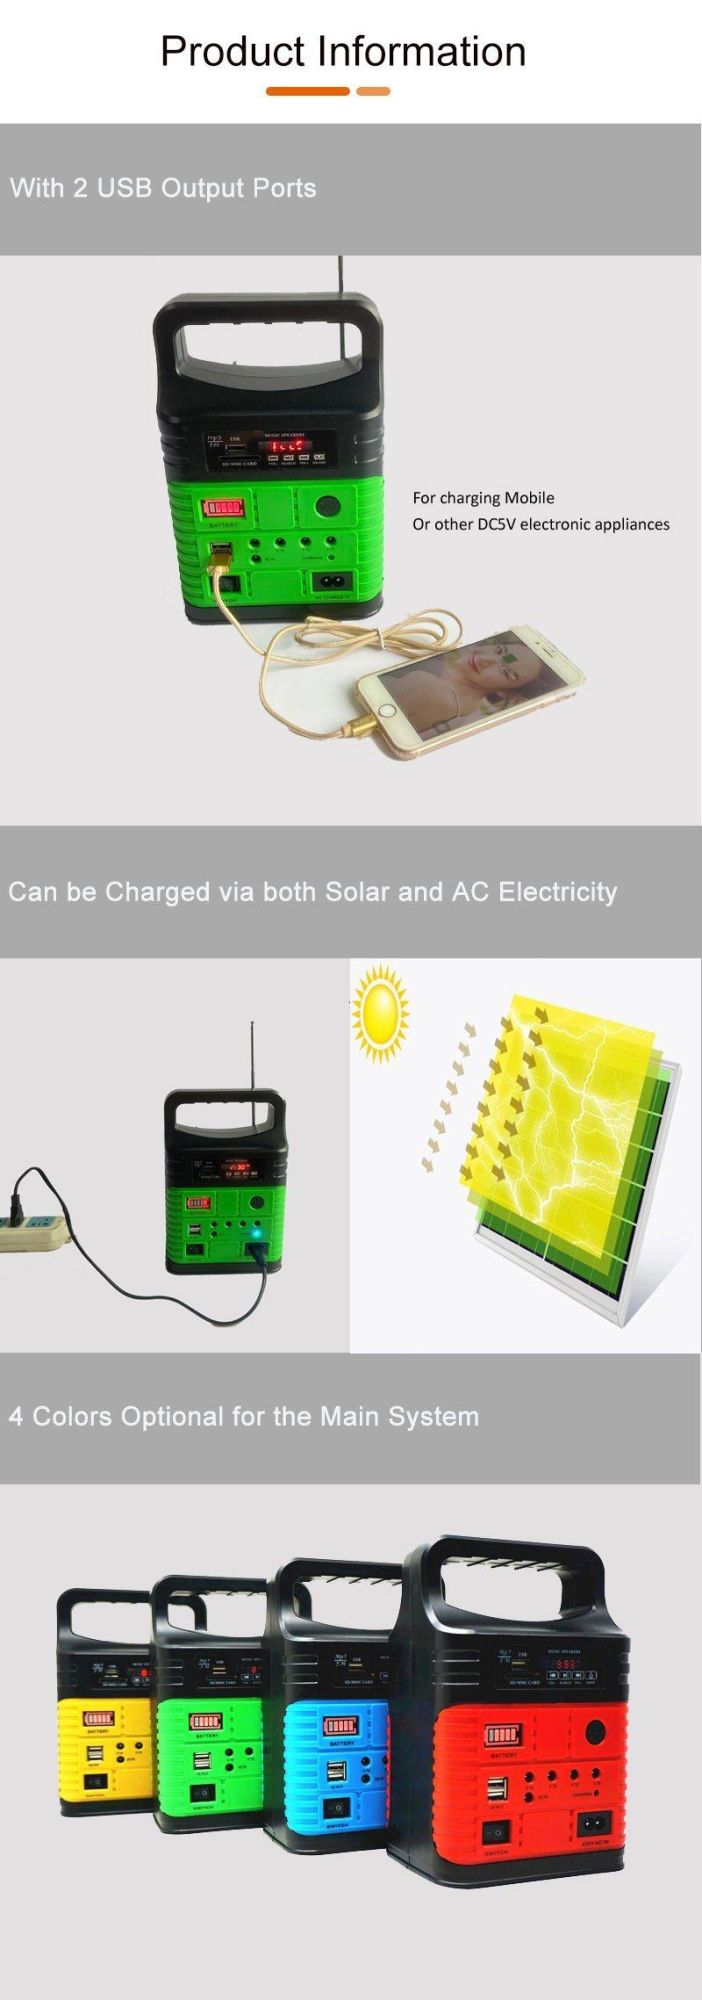 Solar Lamp 5W Solar Power System with 3PCS Solar Lamp Outdoor Solar Light